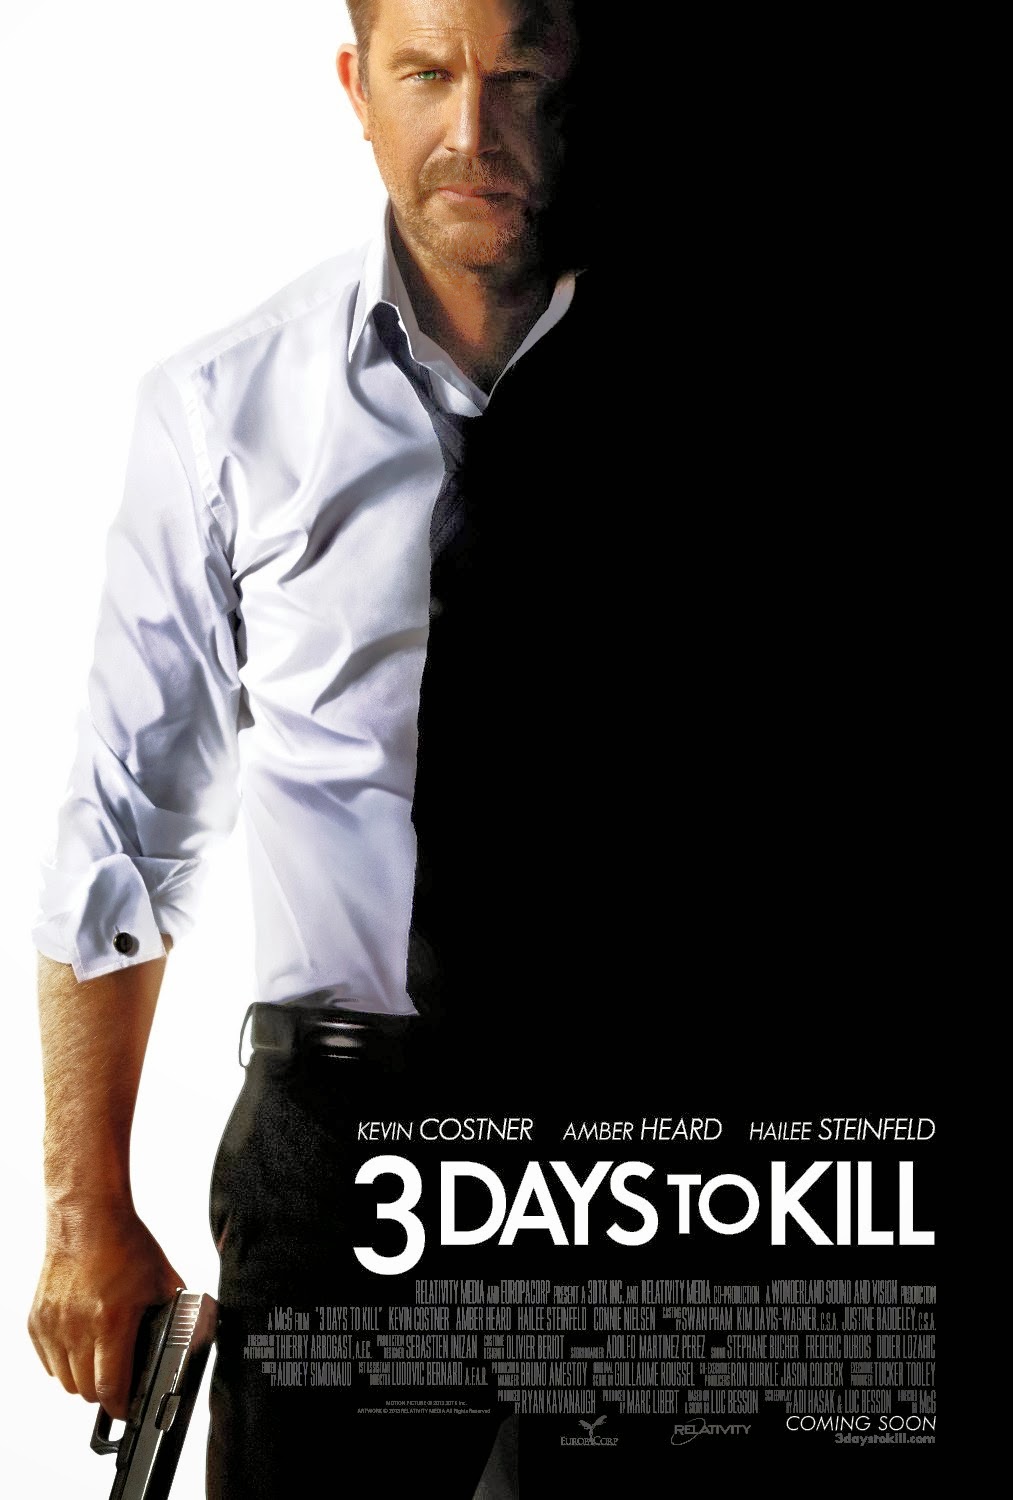 3 Days to Kill movie review